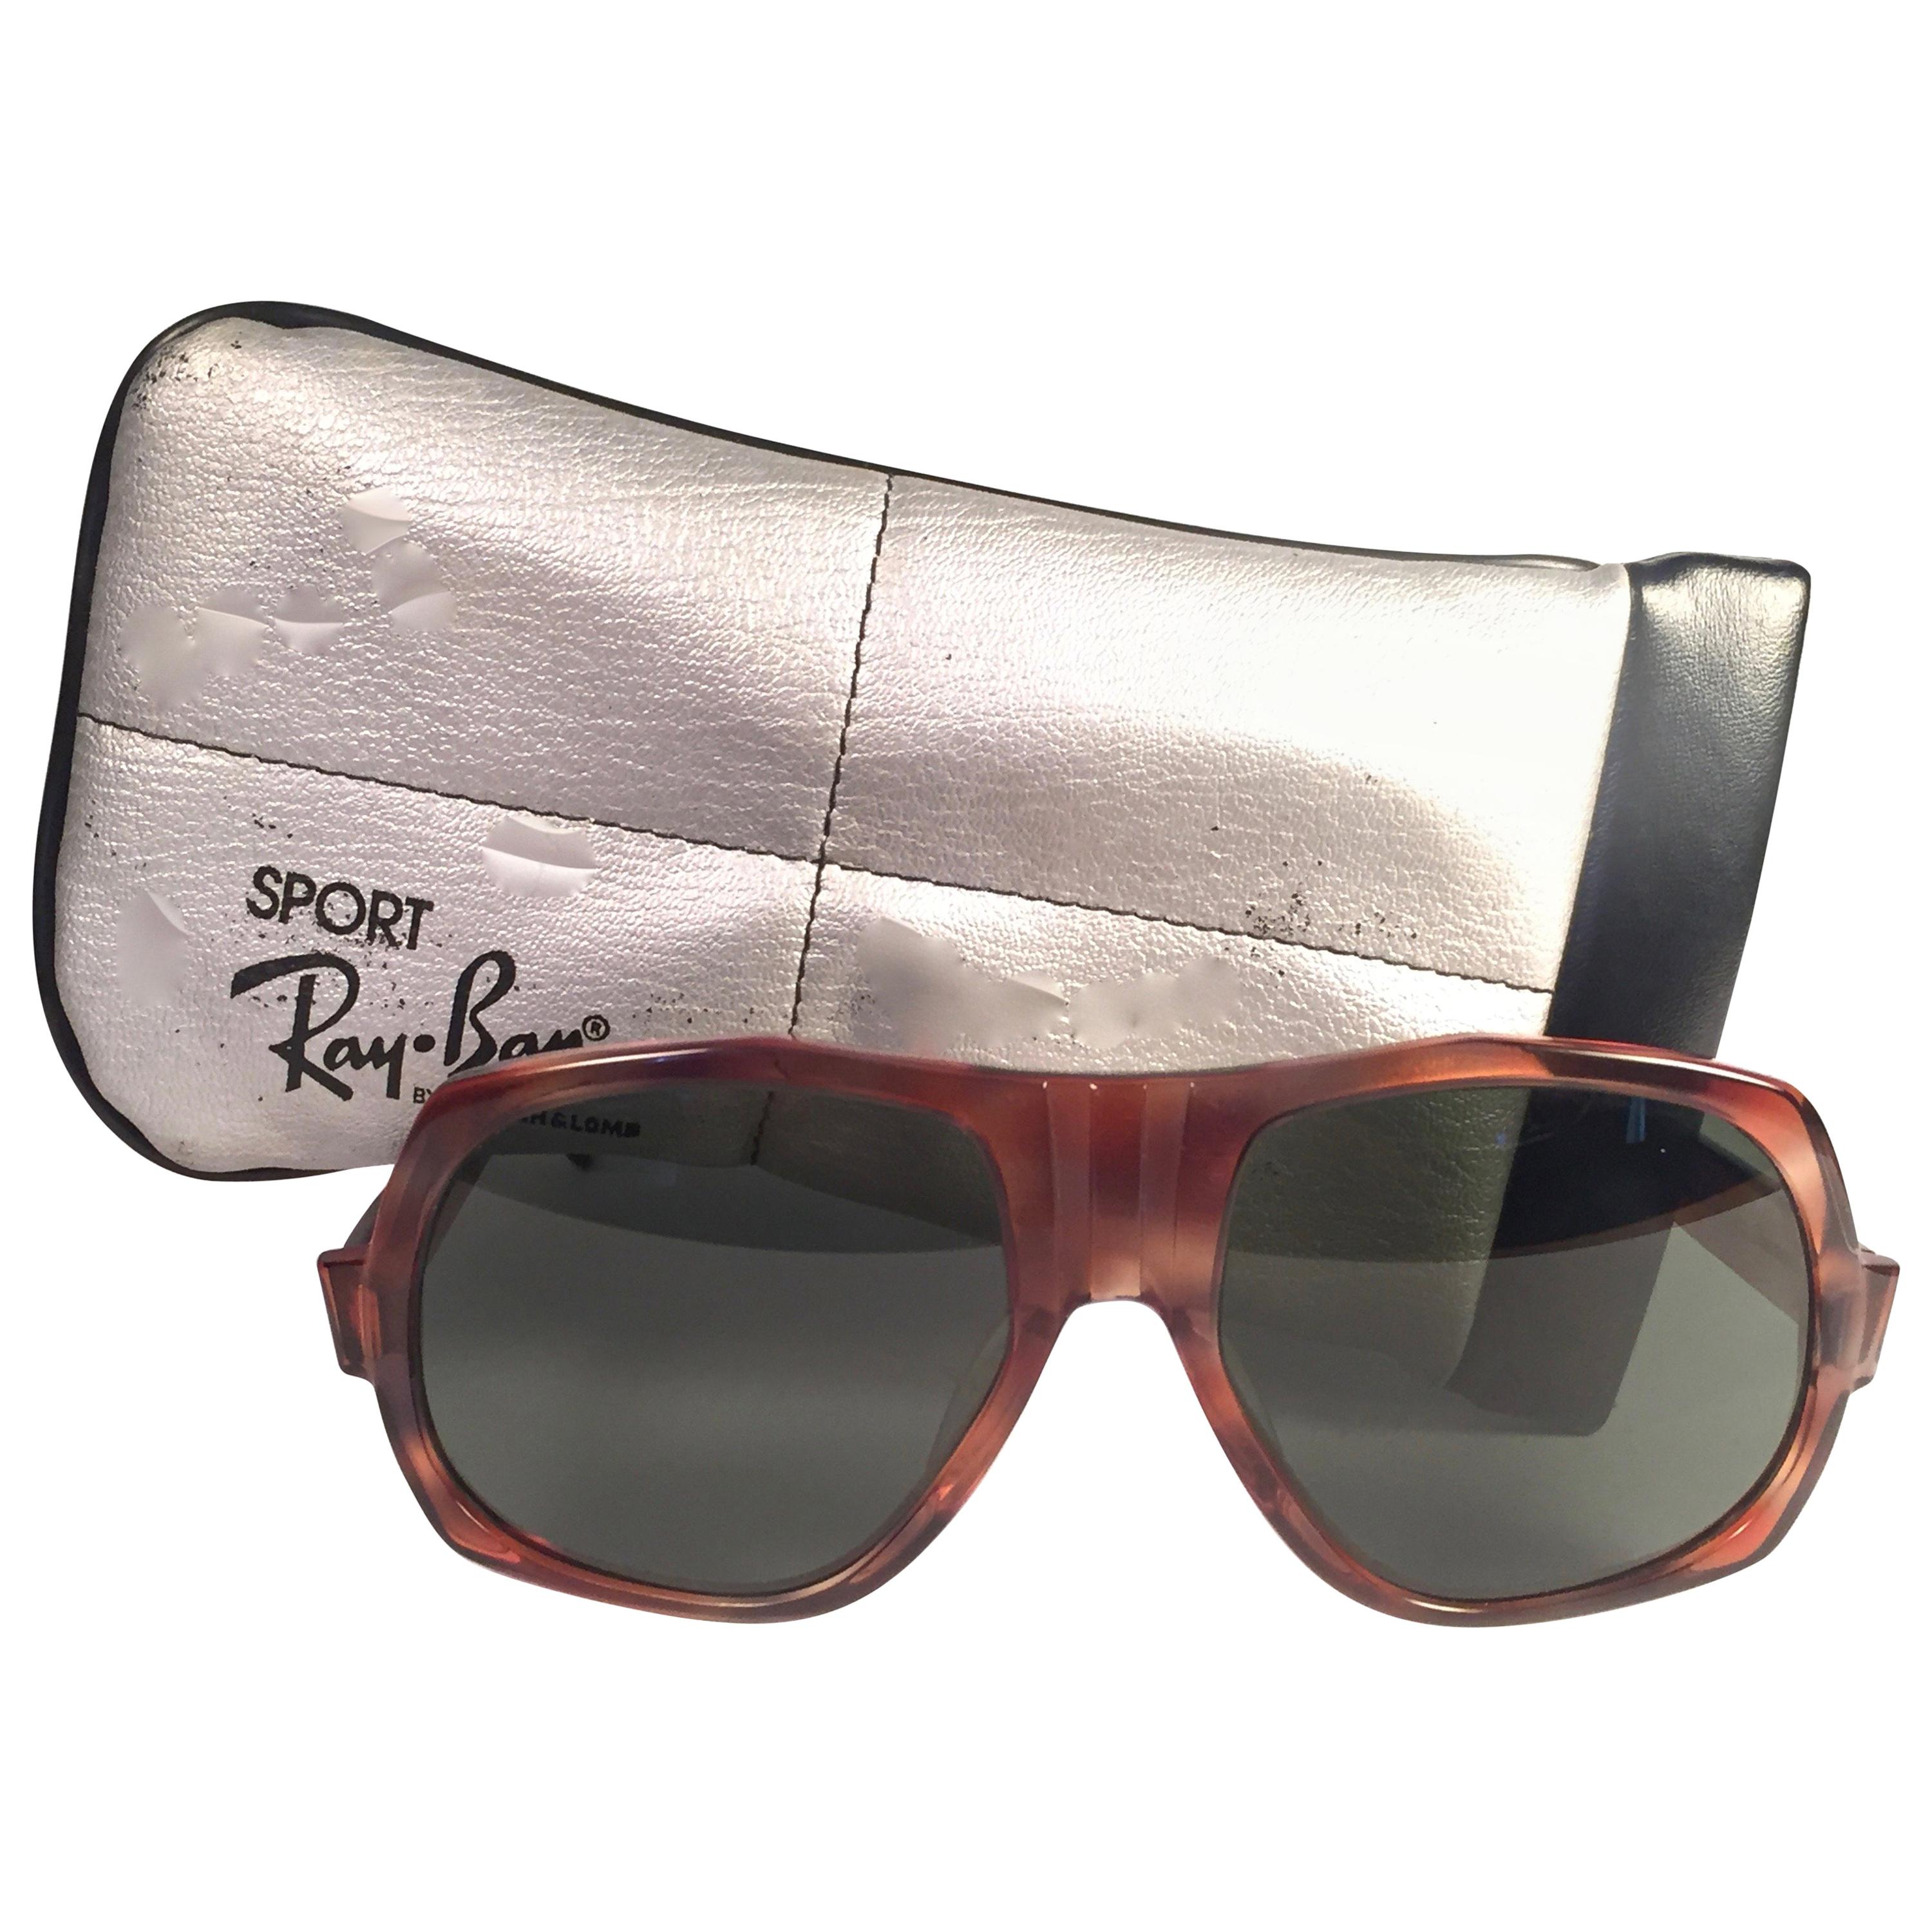 New Vintage Ray Ban B&L Bradshaw Tortoise G15 Grey Lenses Sunglasses USA